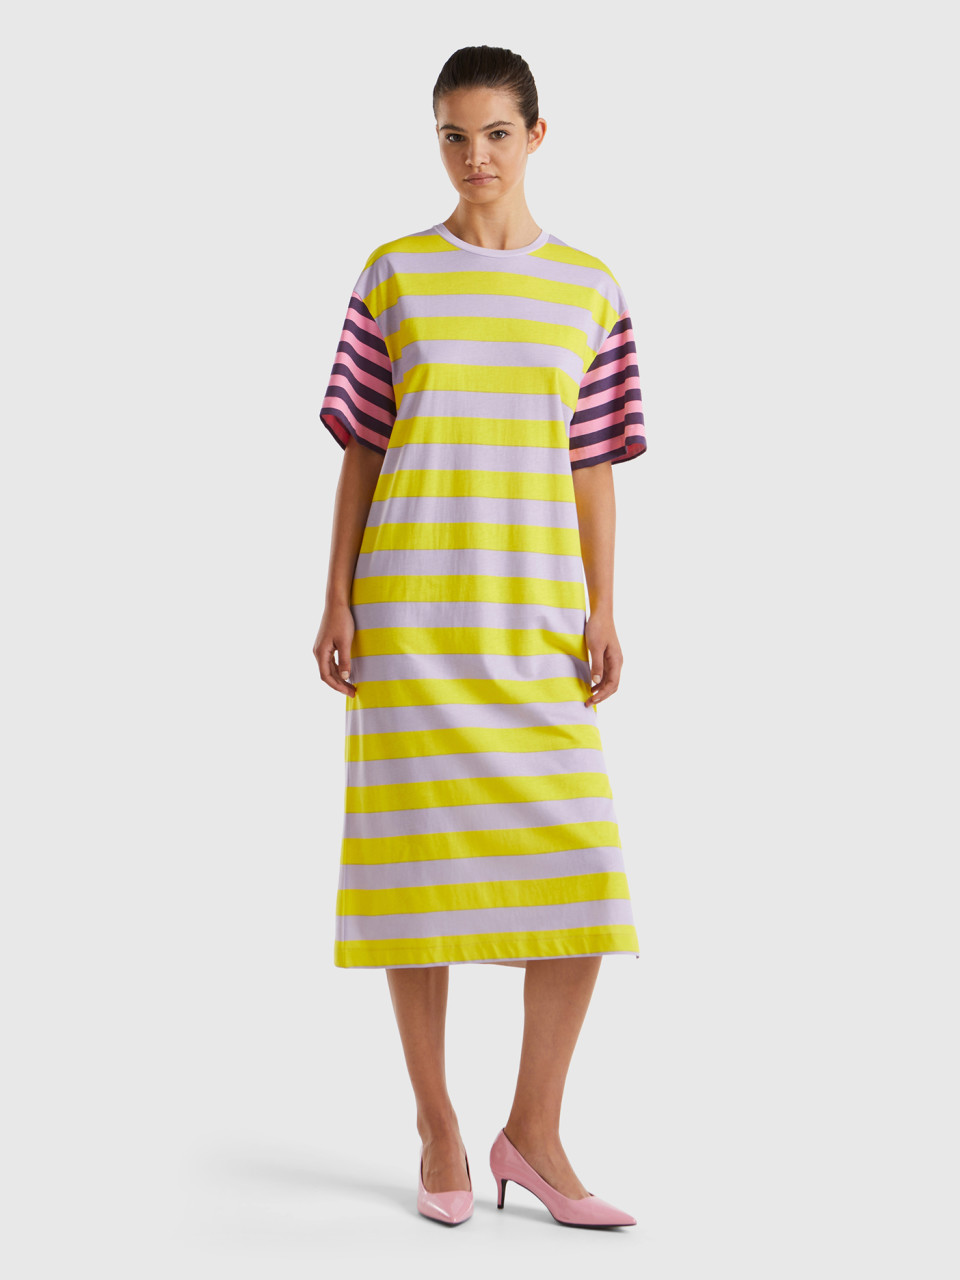 Benetton, Striped Round Neck Dress, Multi-color, Women